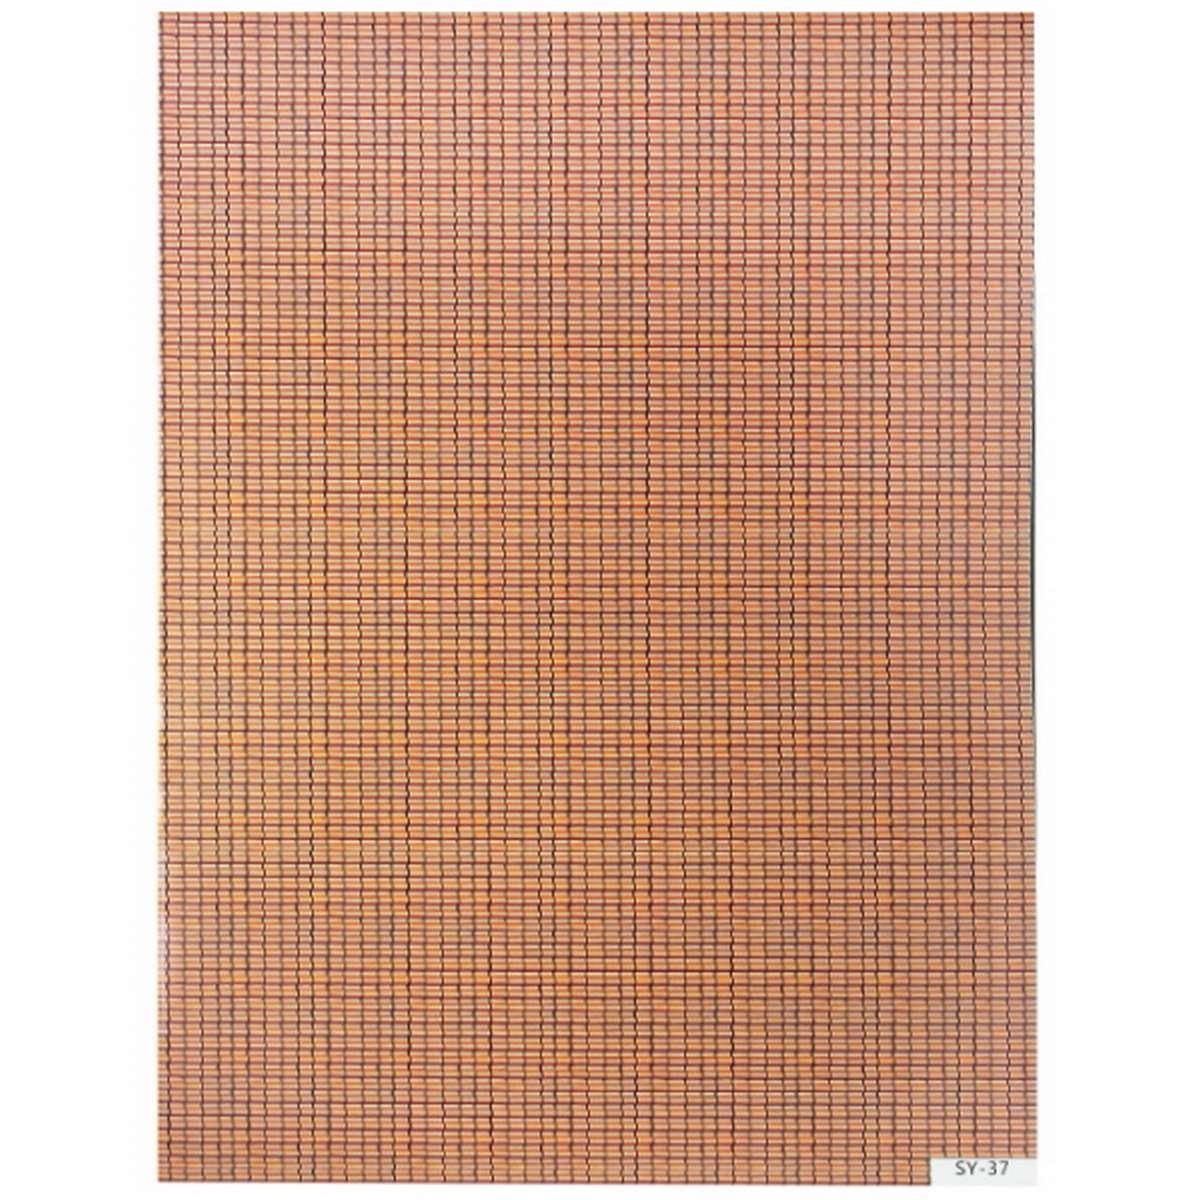 jags-mumbai Miniature Decorative Flooring Paper With Stk A/3 SY-37